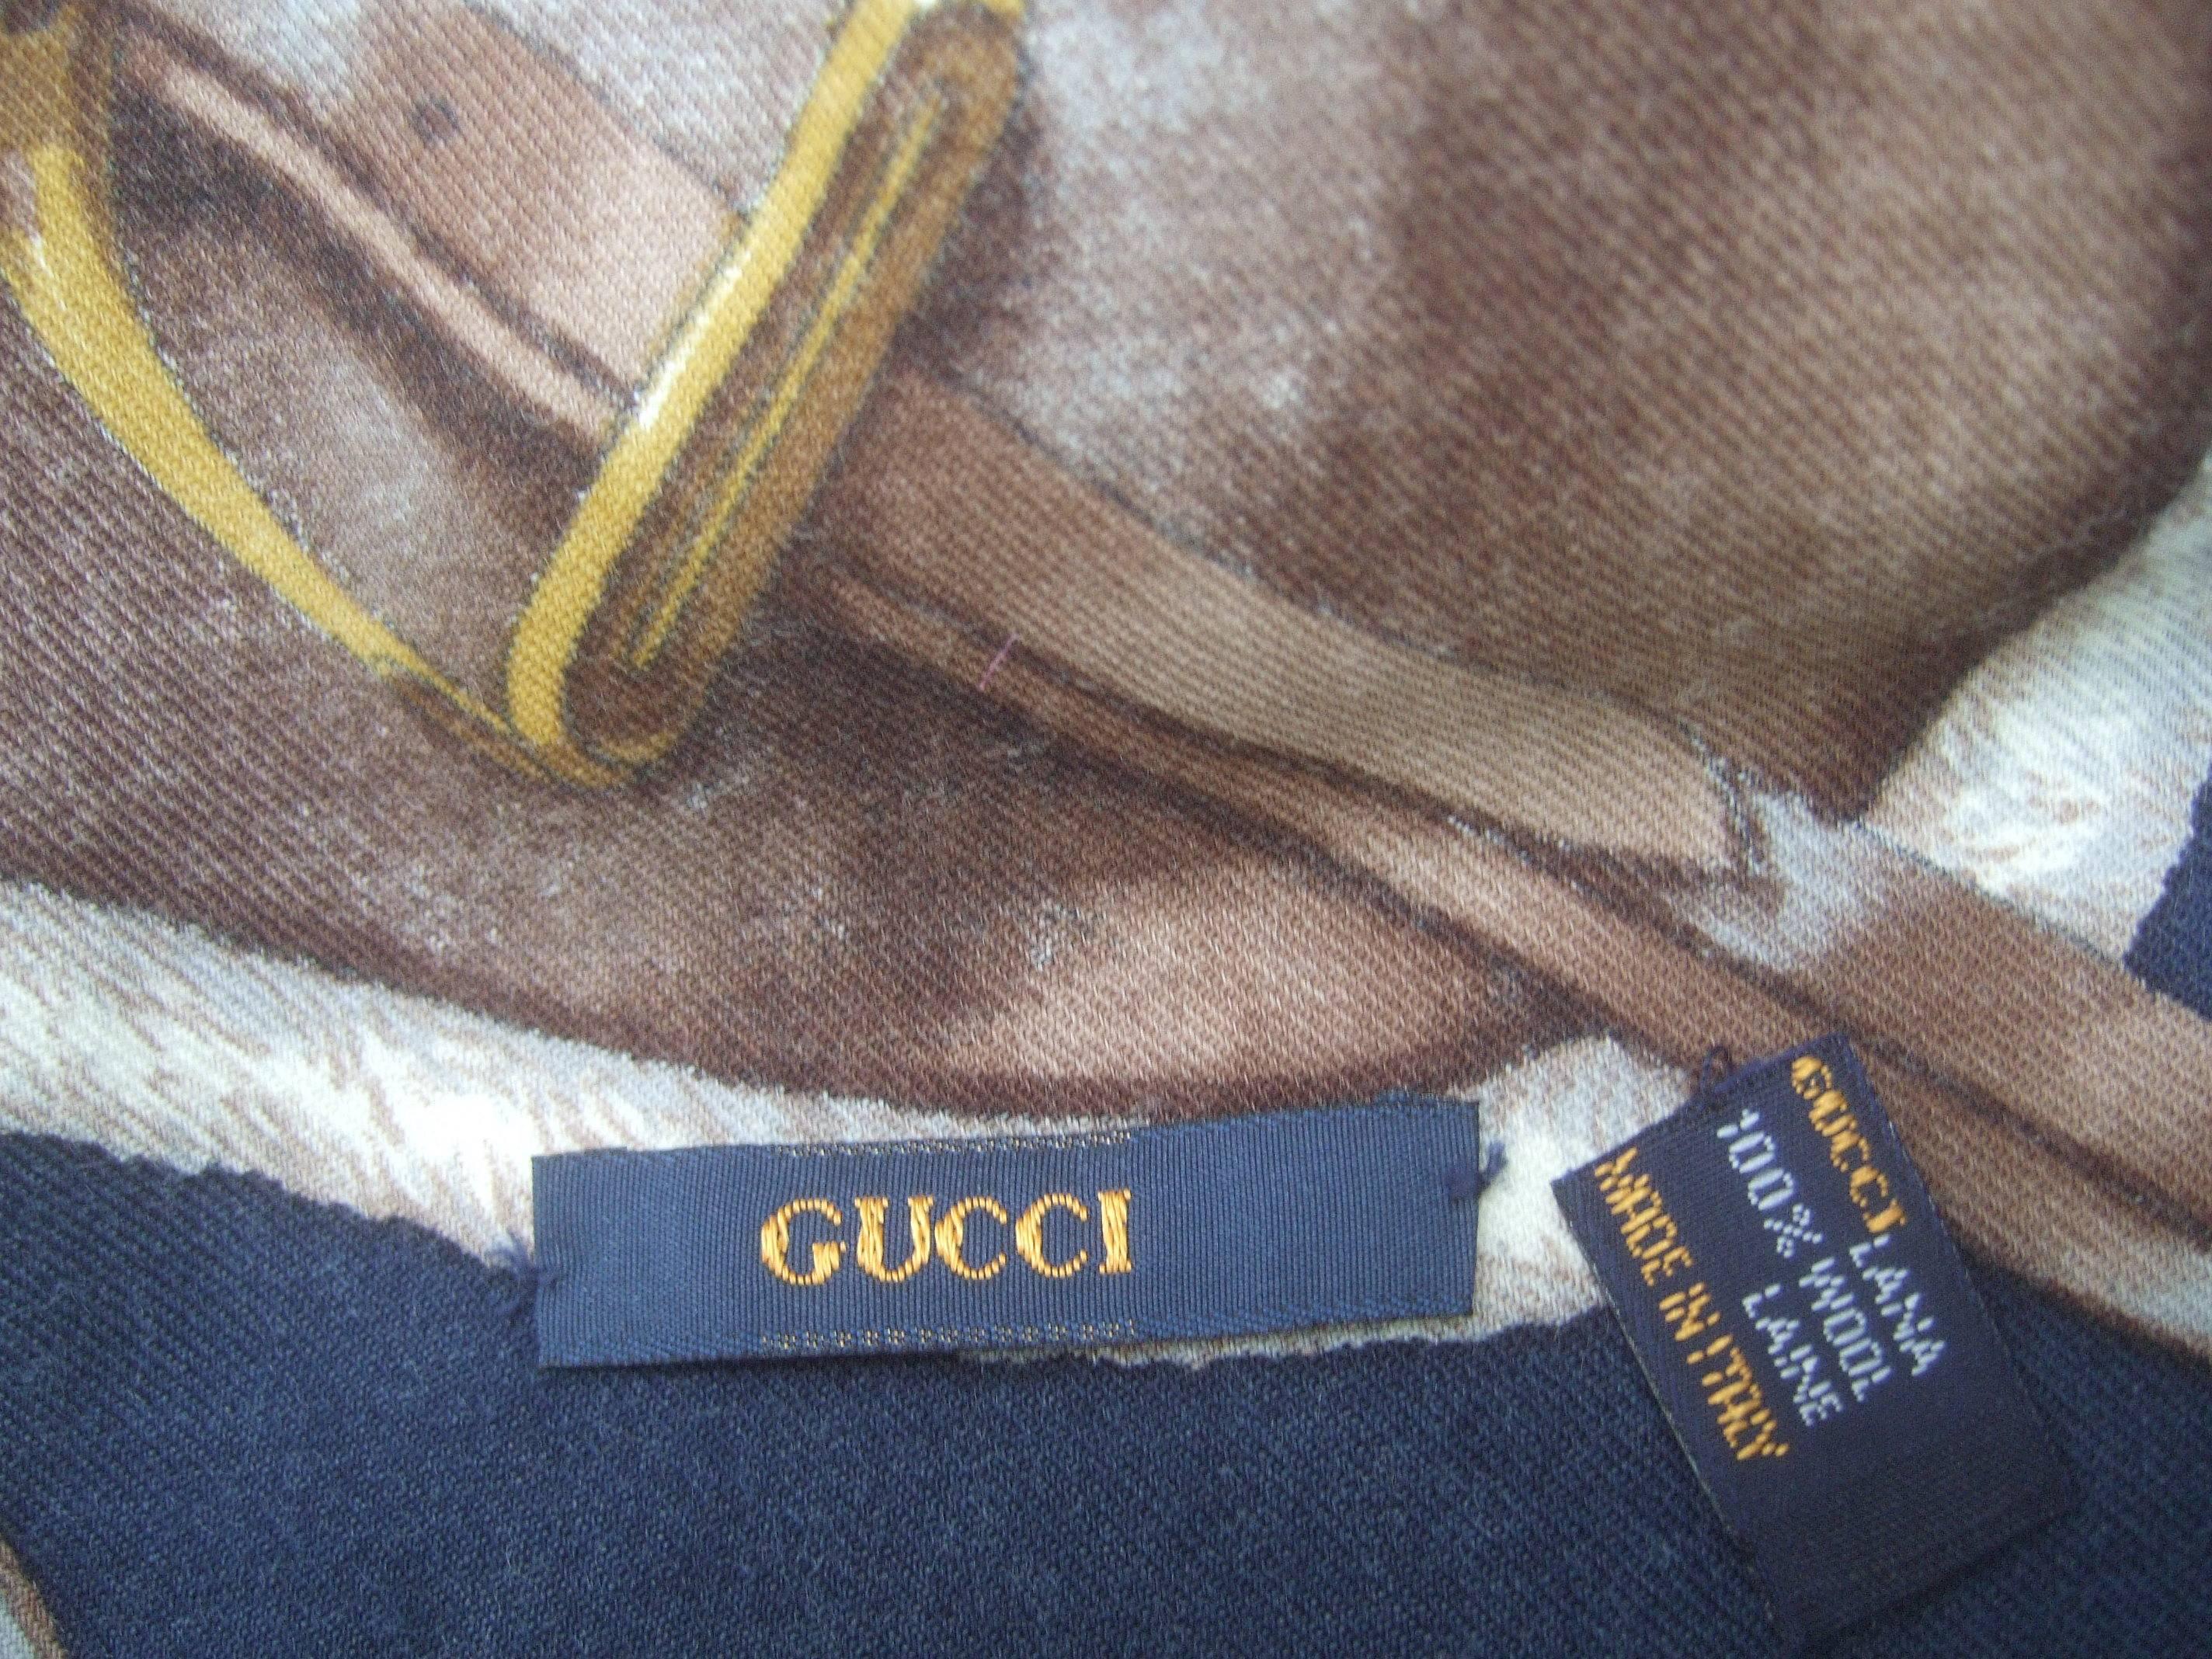 Gucci Italy Massive Equestrian Theme Wool Shawl - Scarf c 1990s 52 x 52 For Sale 2